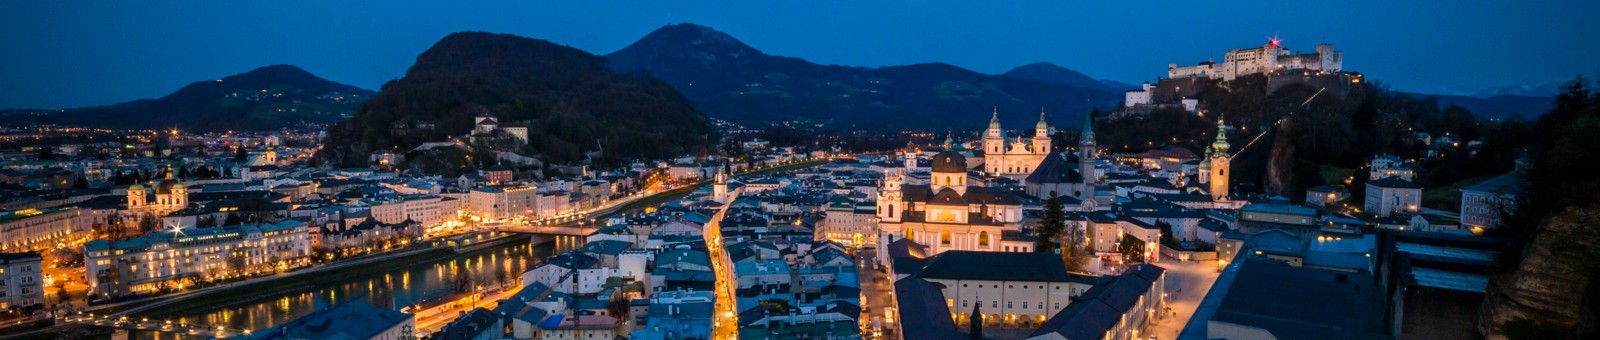     City of Salzburg 